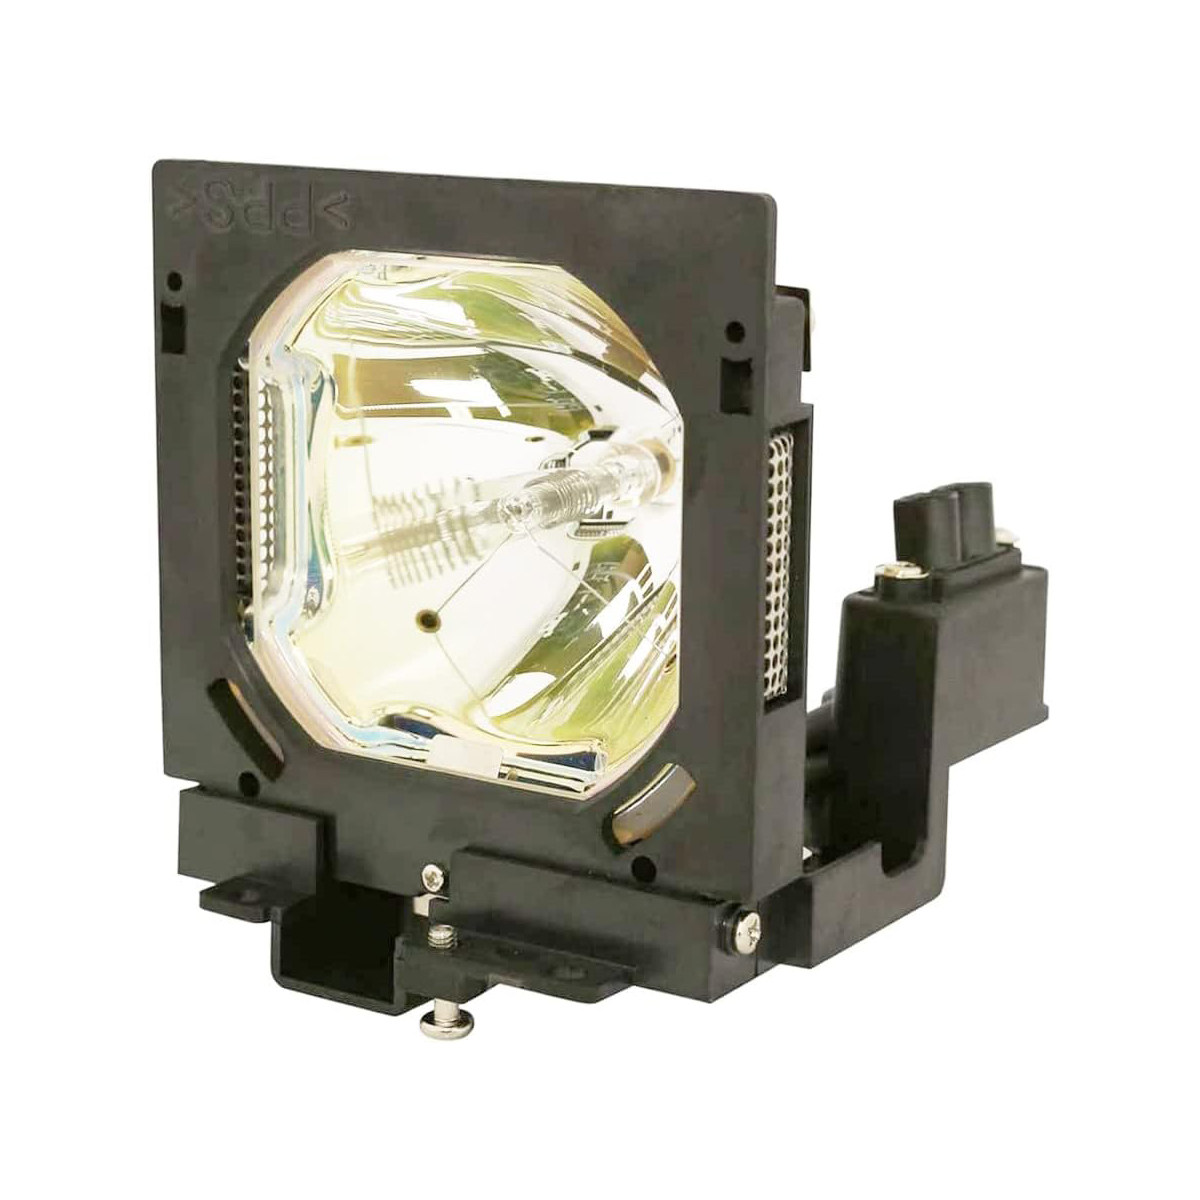 Replacement Projector lamp POA-LMP39 For Sanyo PLC-EF32 PLC-EF32L PLC-EF30 PLC-EF30L